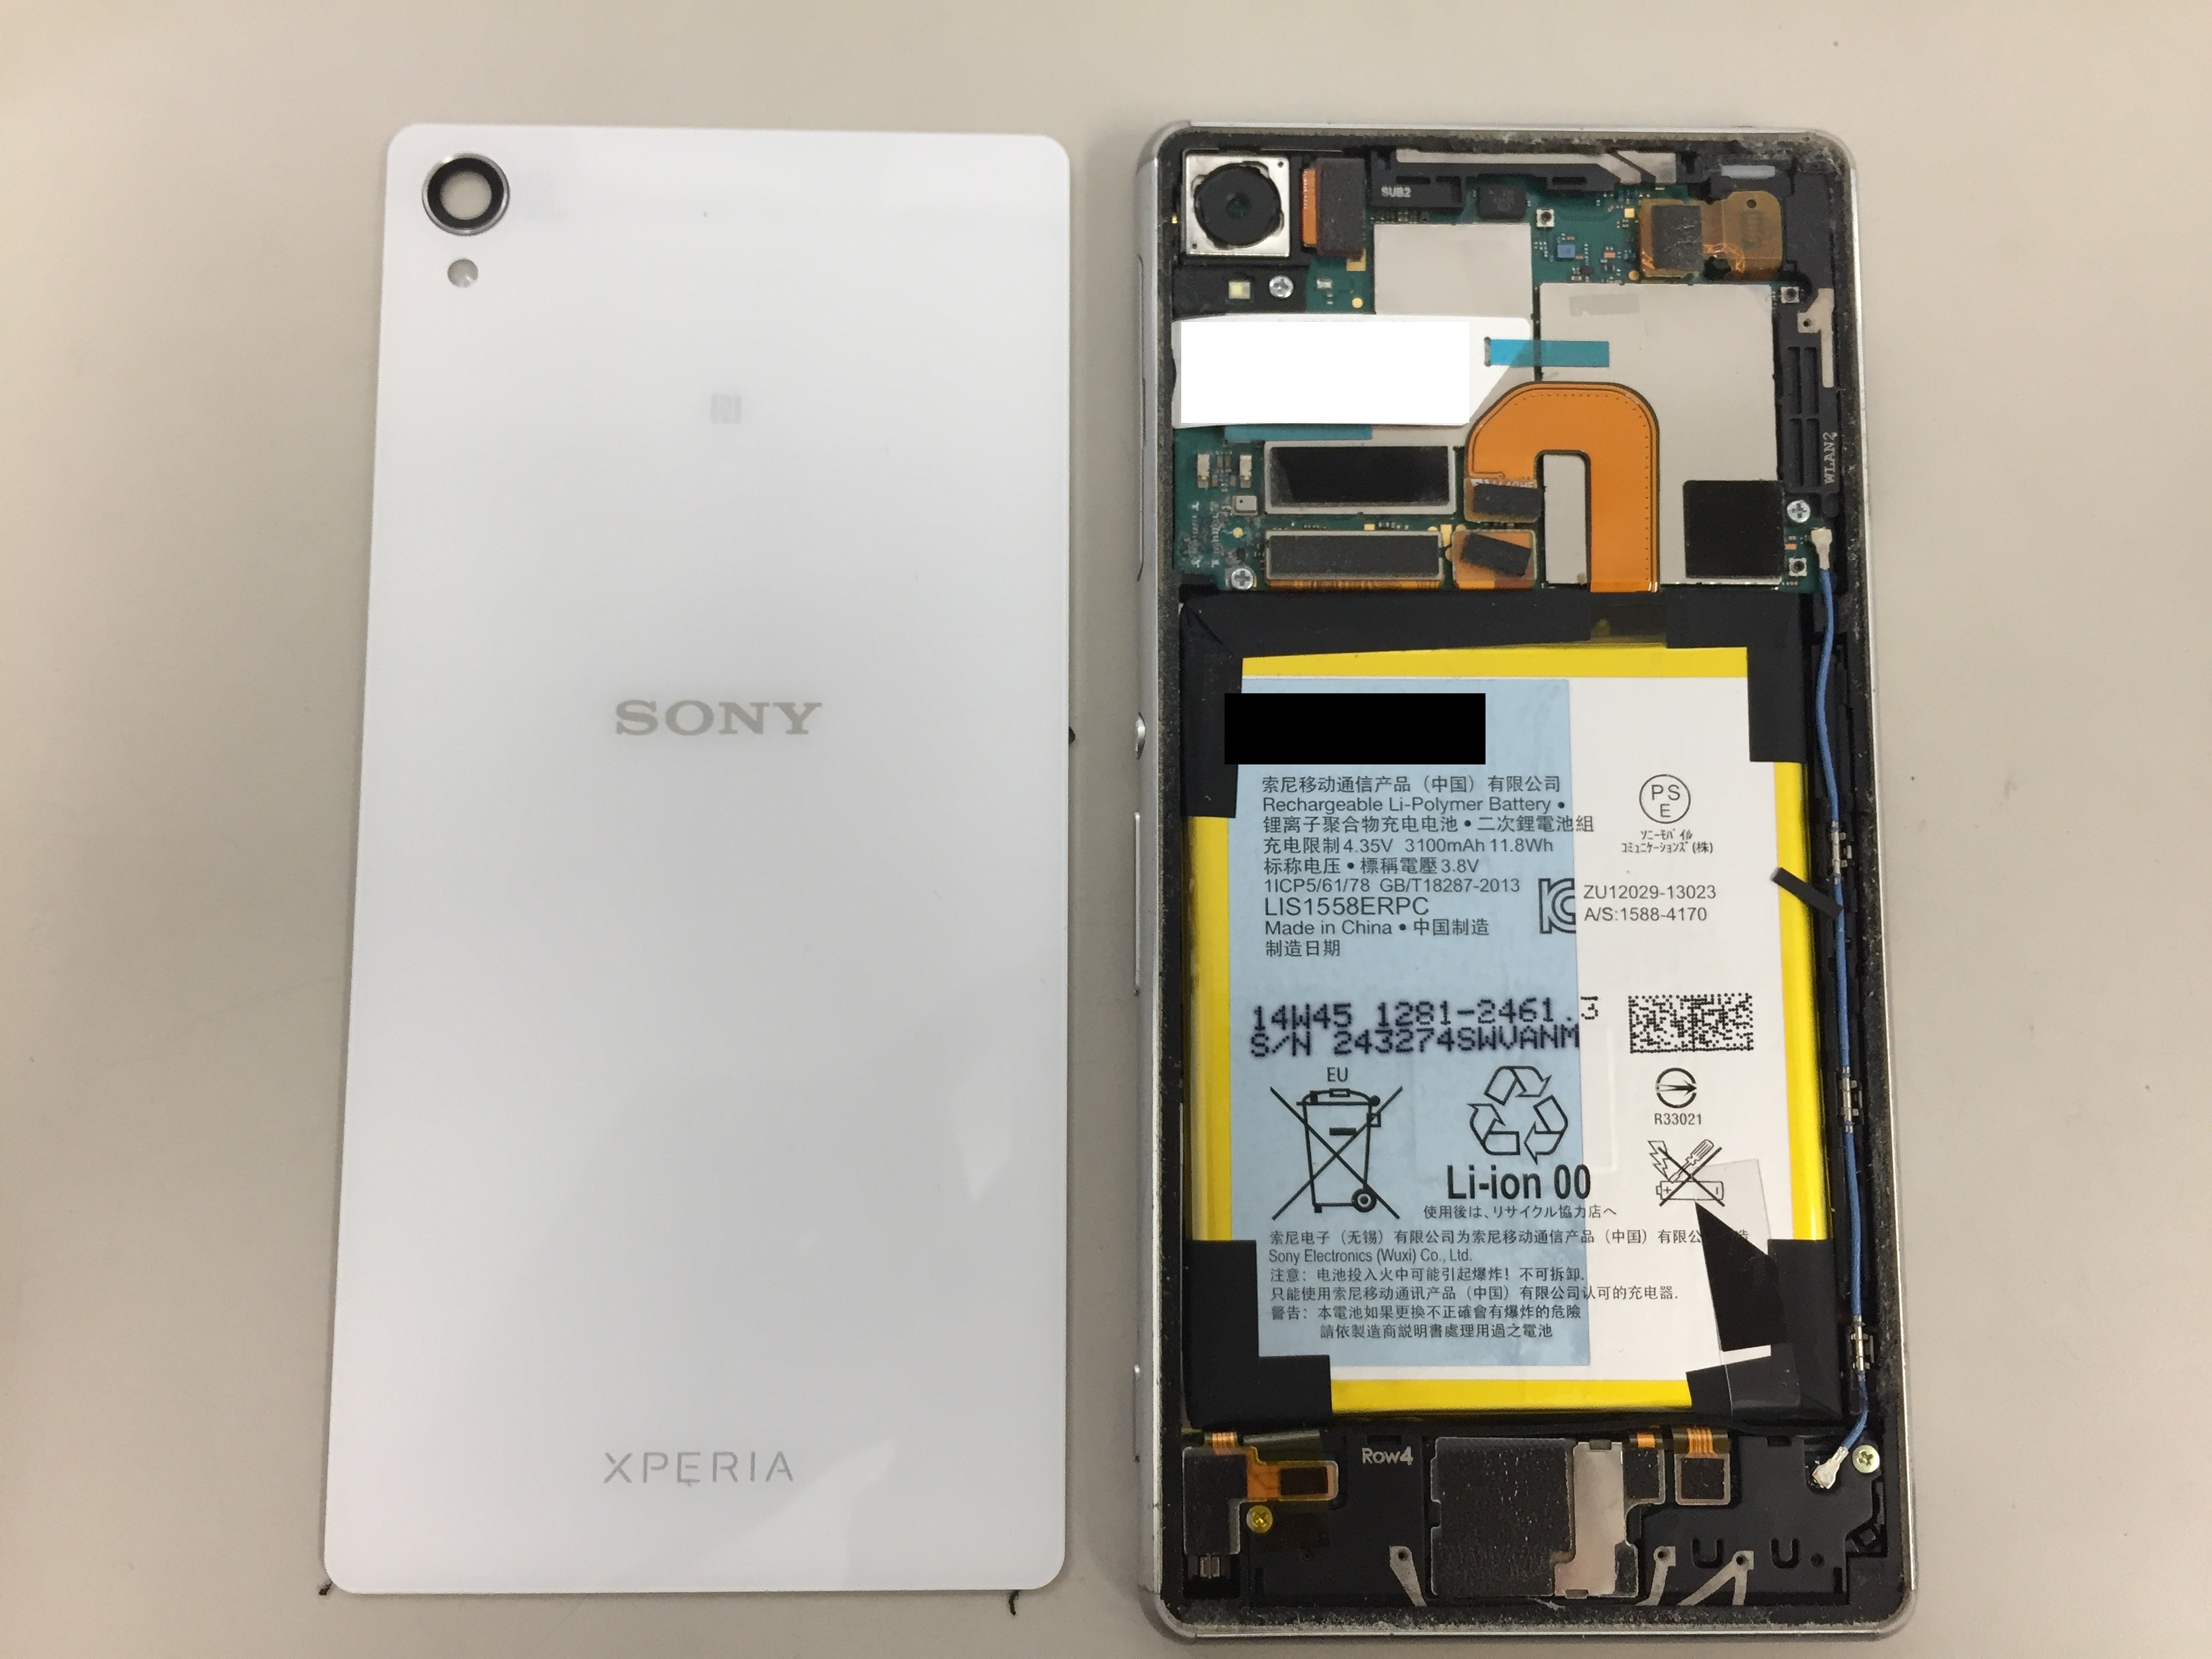 Xperia エクスペリア が熱い 発熱の原因はバッテリーの消耗かもしれません Xperia Galaxy Aquos Zenfone Huawei修理のアンドロイドホスピタル